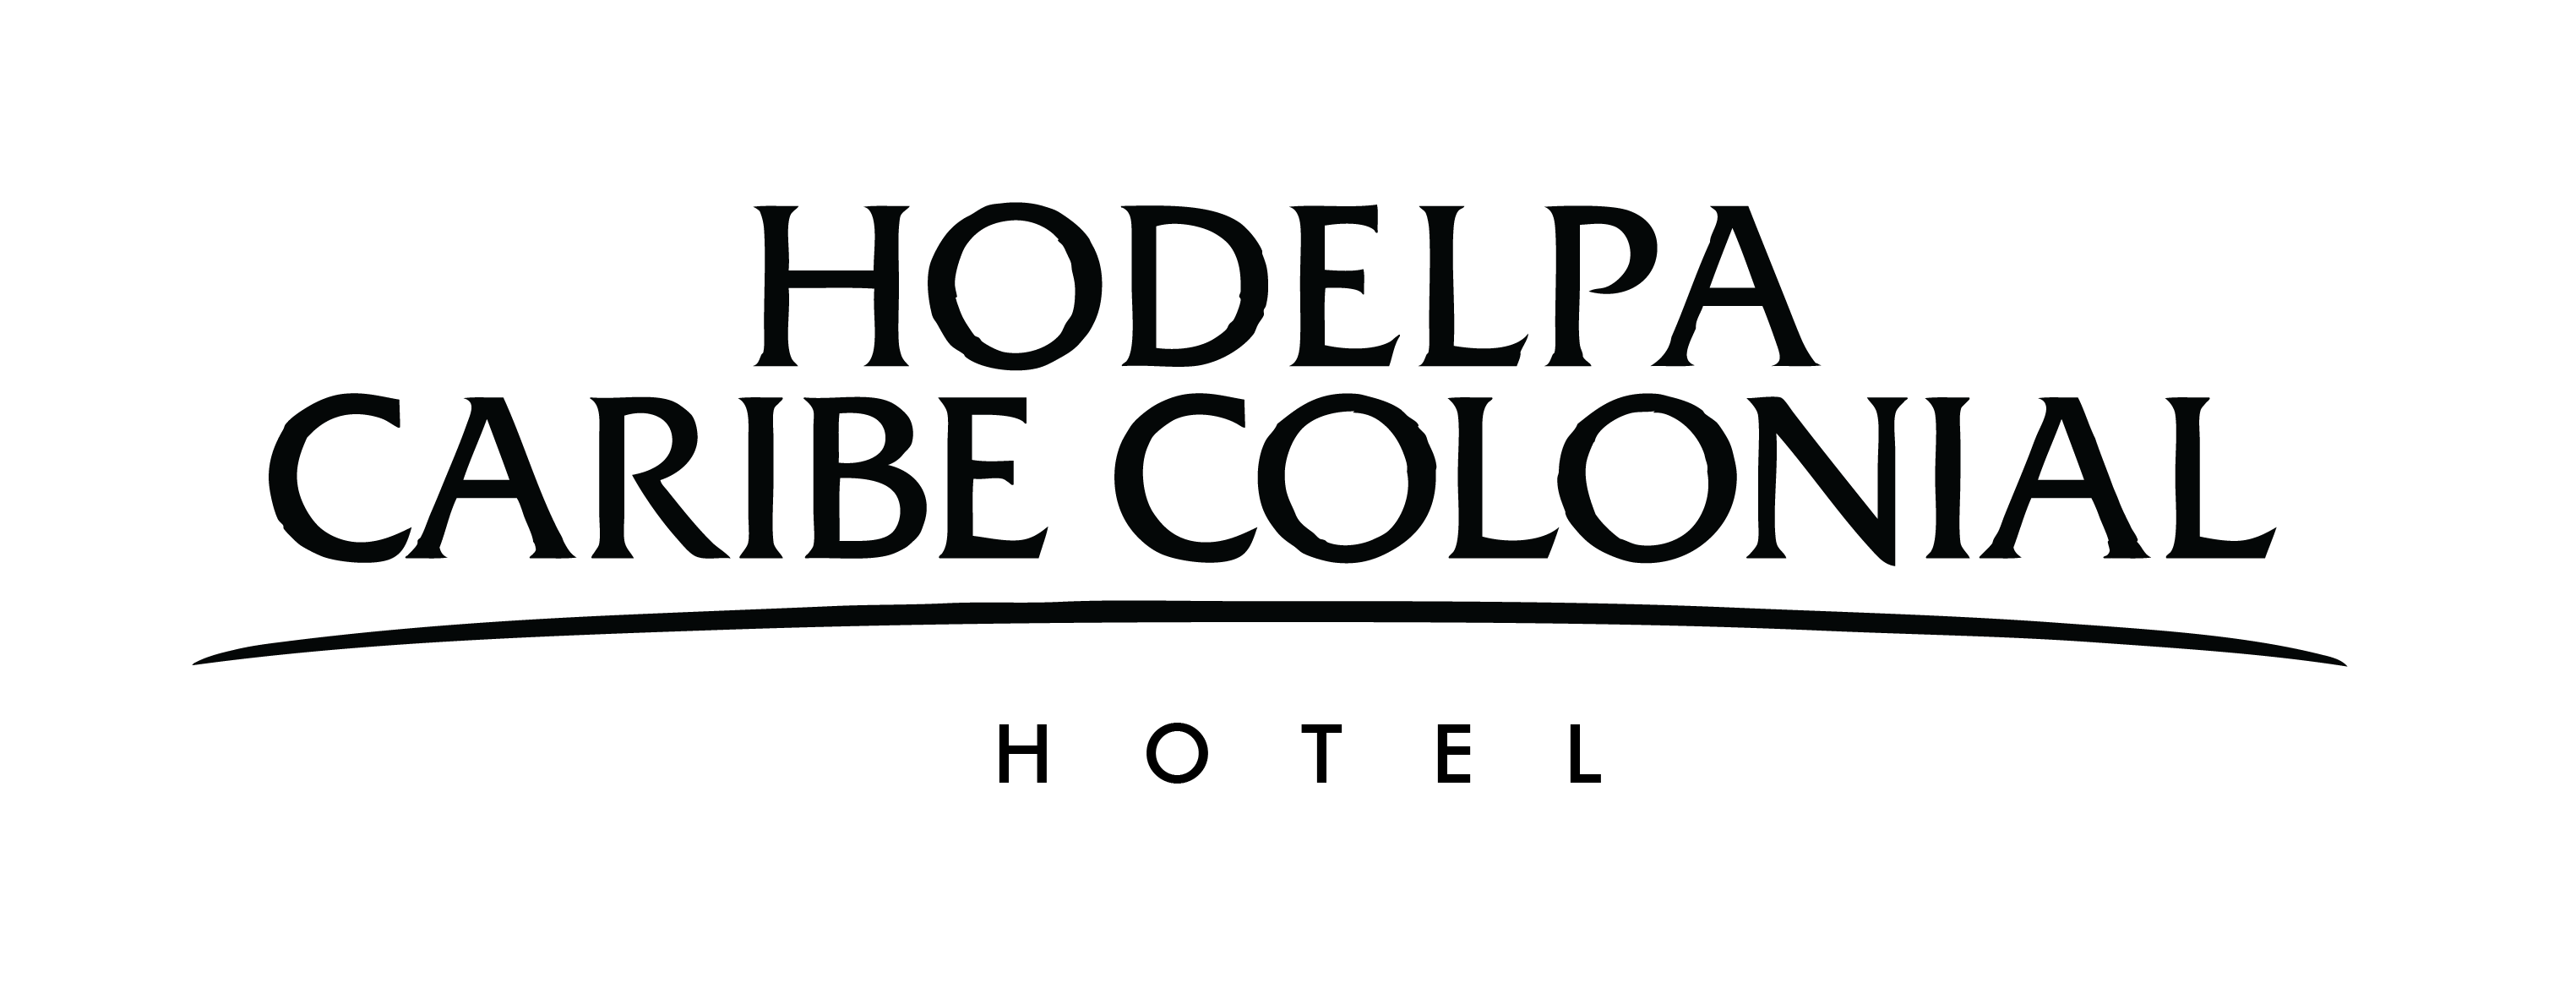 hodelpa-caribe-colonial-logo.png